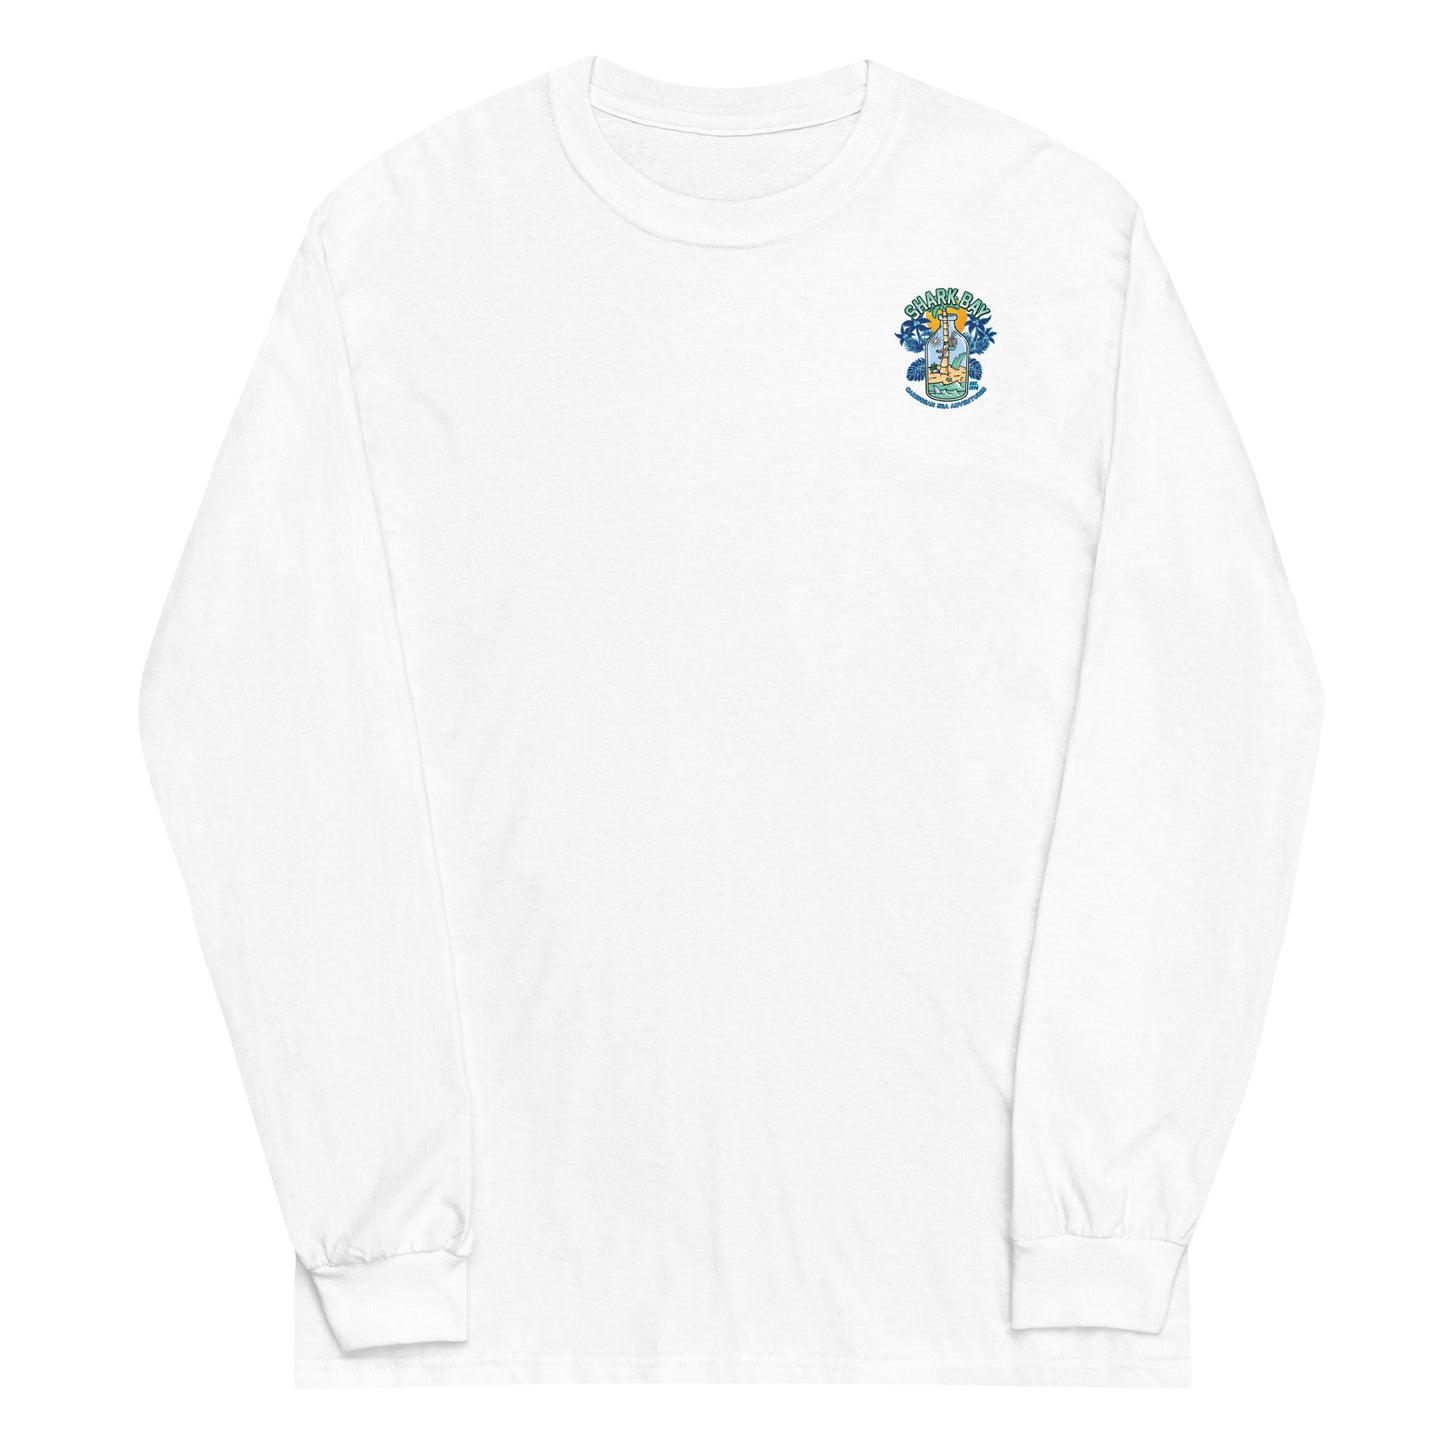 Shark Bay Long Sleeve Shirt